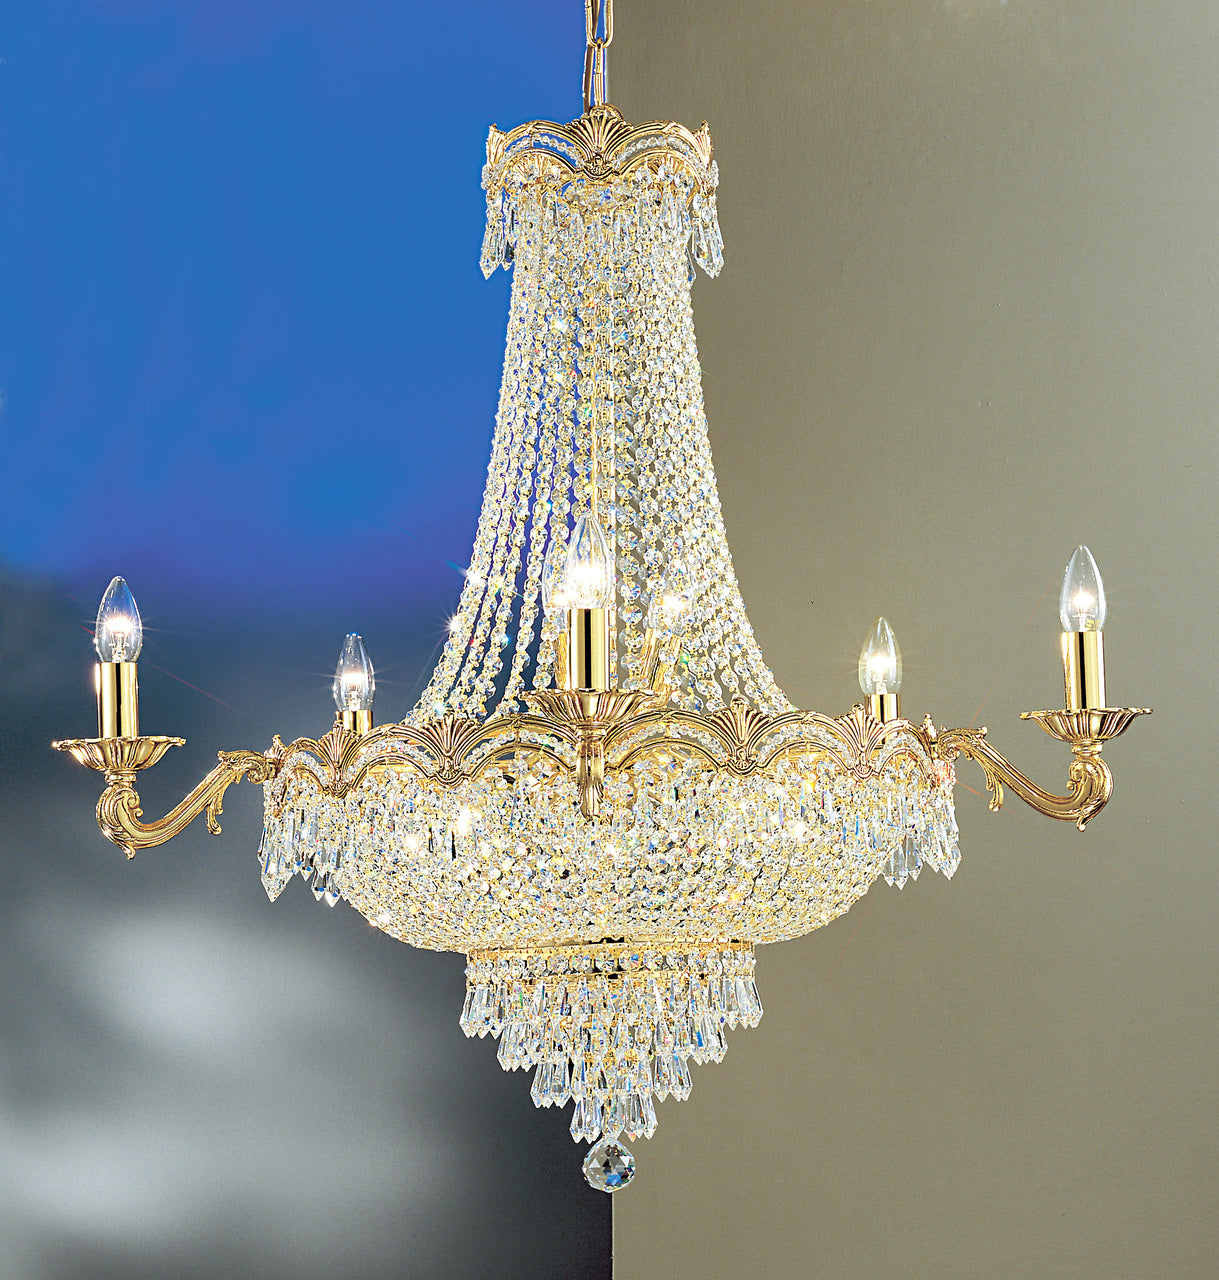 Classic Lighting 1859 G S Regency II Crystal Chandelier in 24k Gold (Imported from Spain)